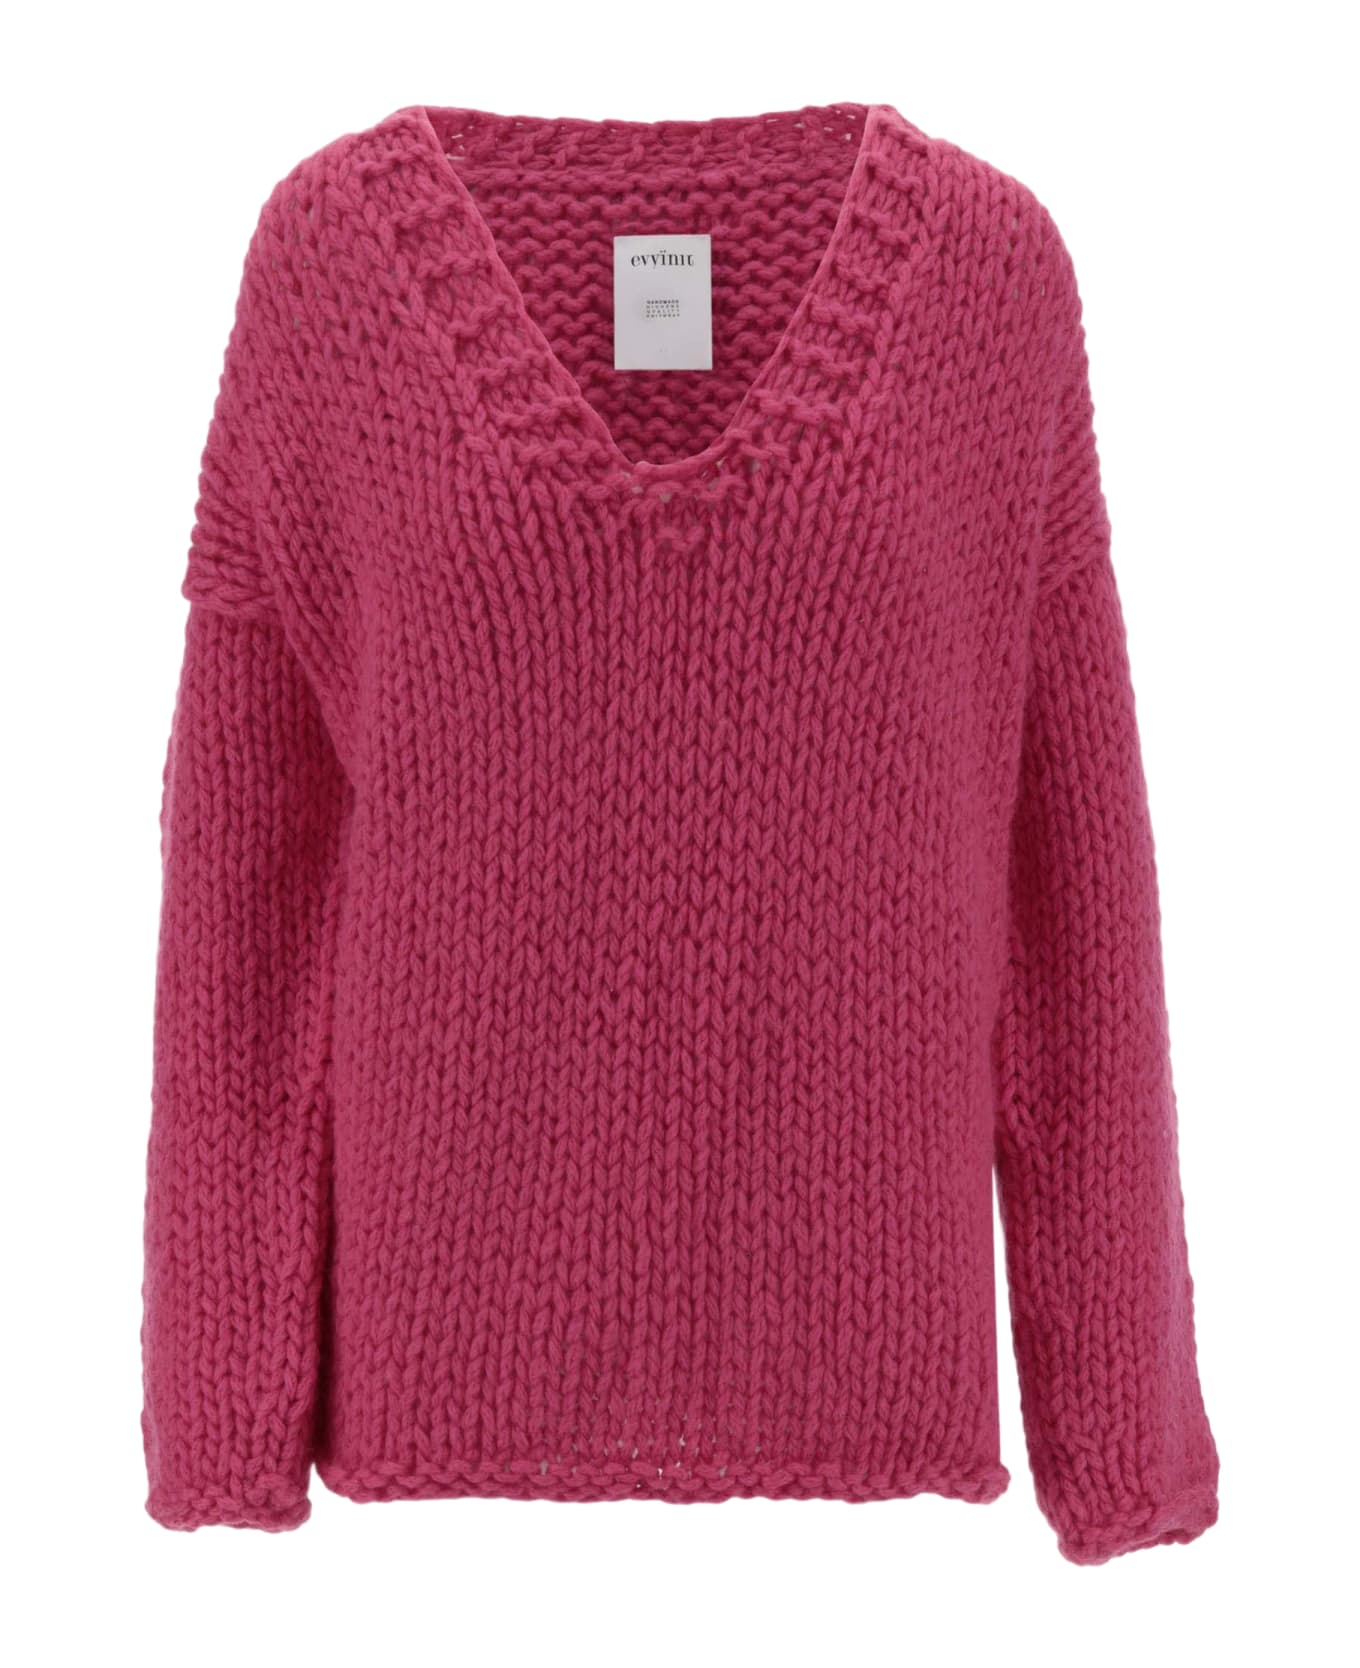 Evyinit Merino Wool Blend Sweater - Fuchsia